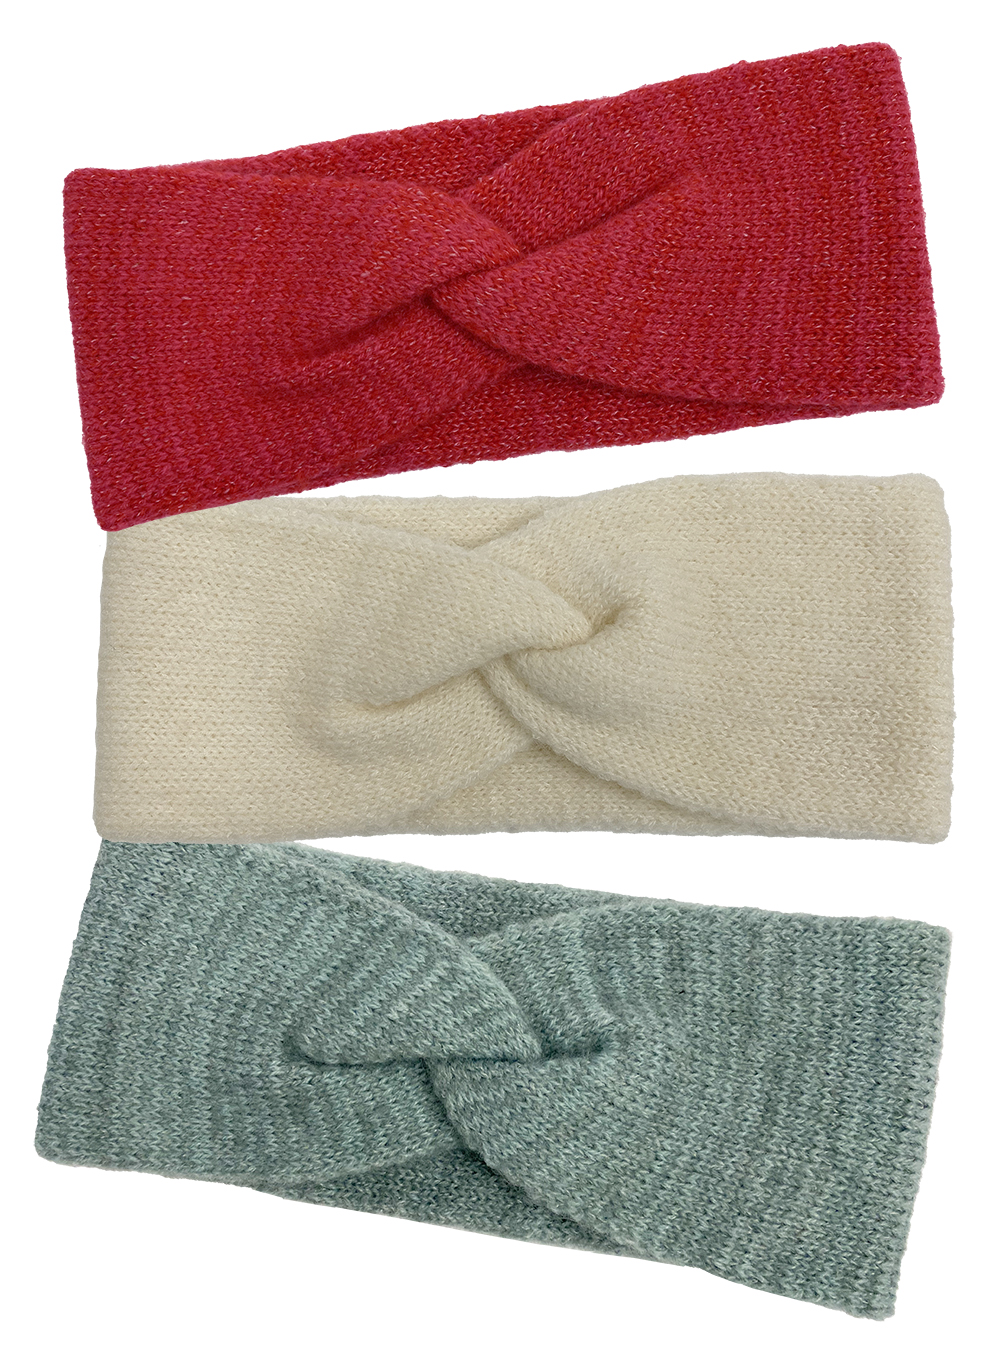 Glisten Knit Earband - Scarves & Accessories